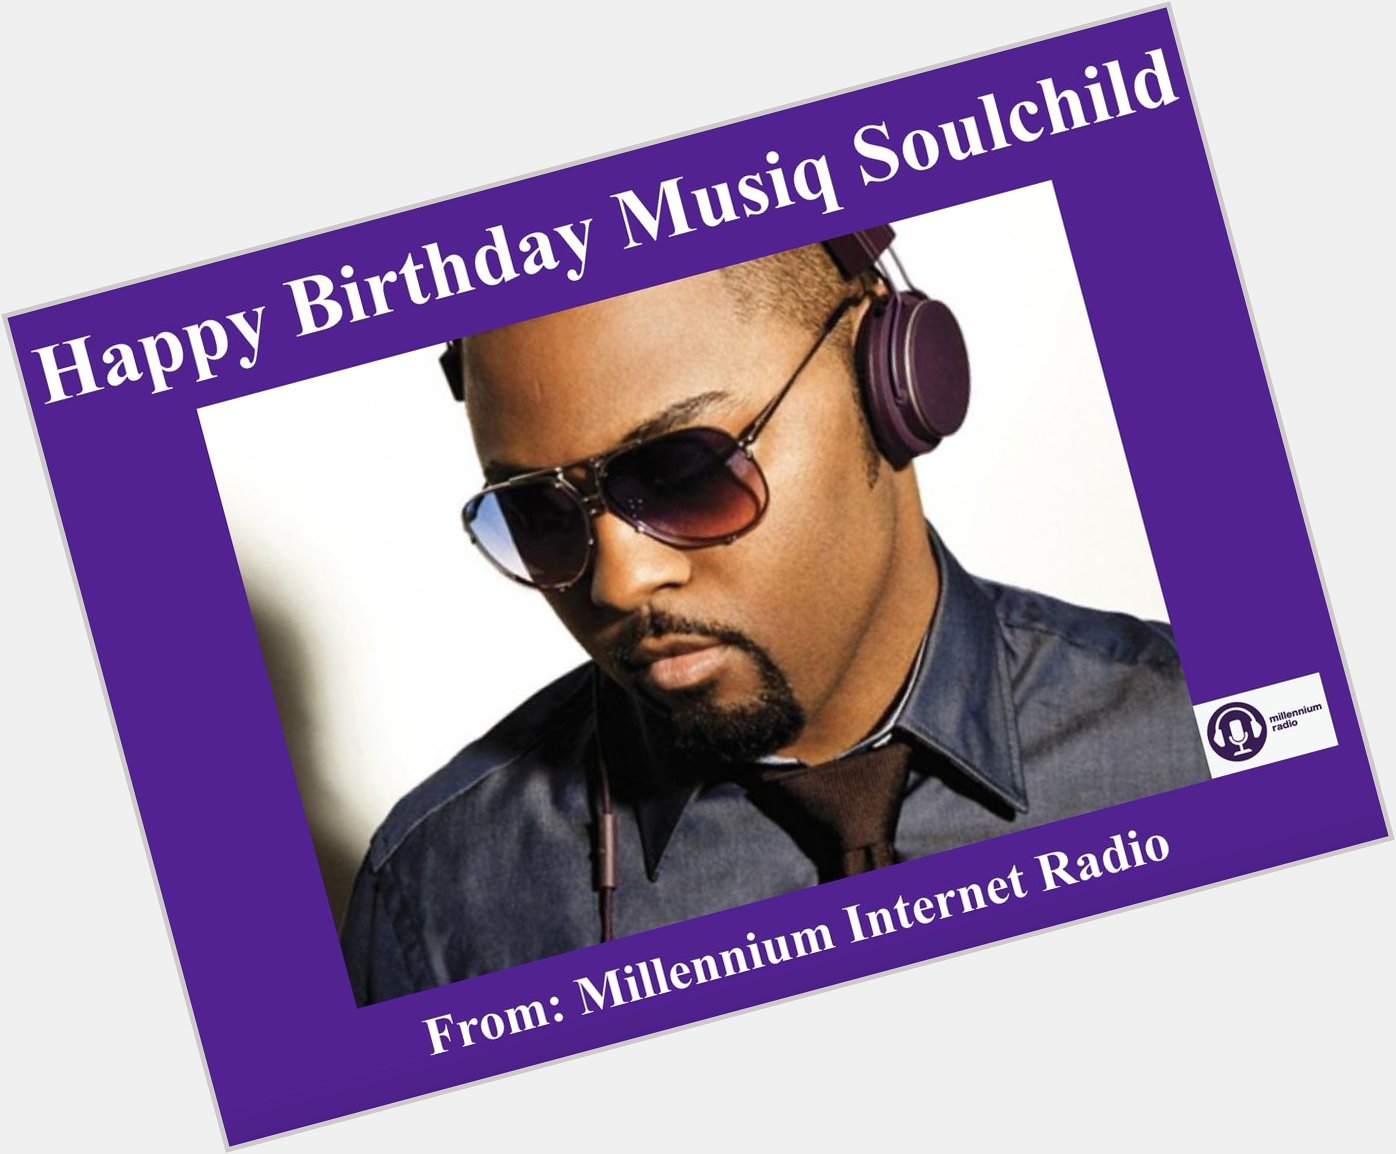 Happy Birthday to singer and songwriter Musiq Soulchild! 